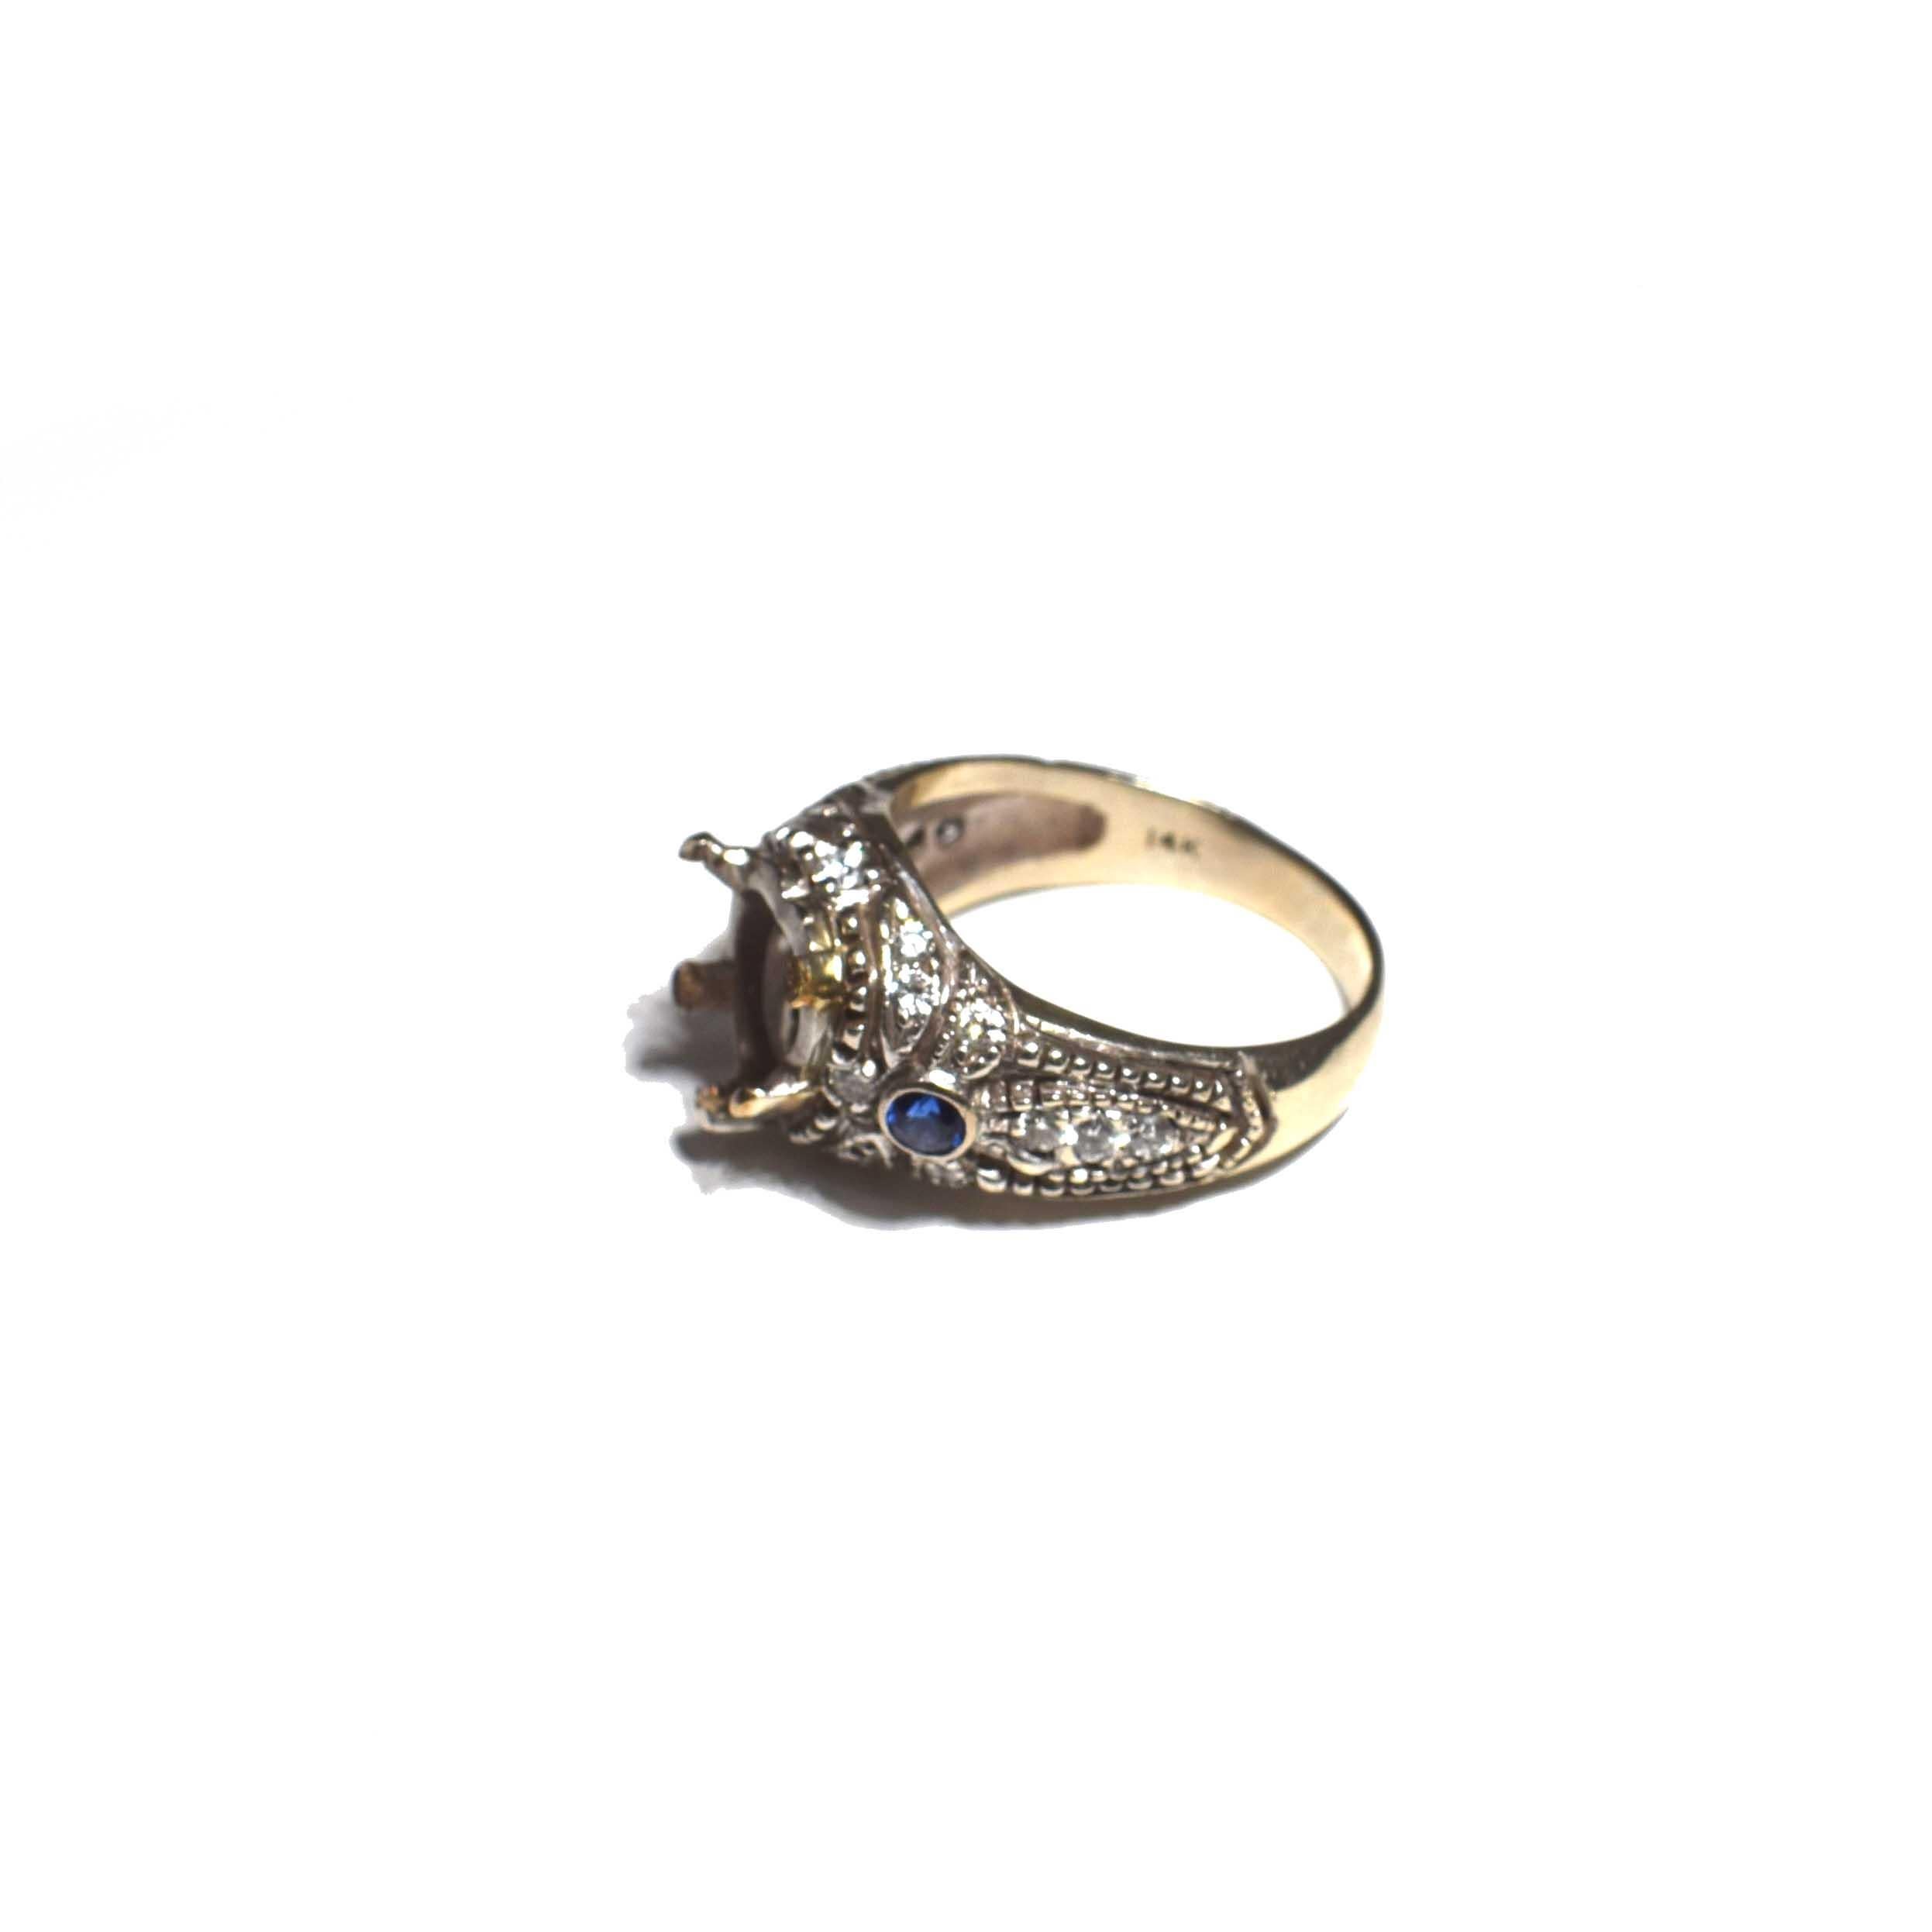 Women's or Men's Antique Art Nouveau Heart-Shaped Diamond and Sapphire Ring Setting